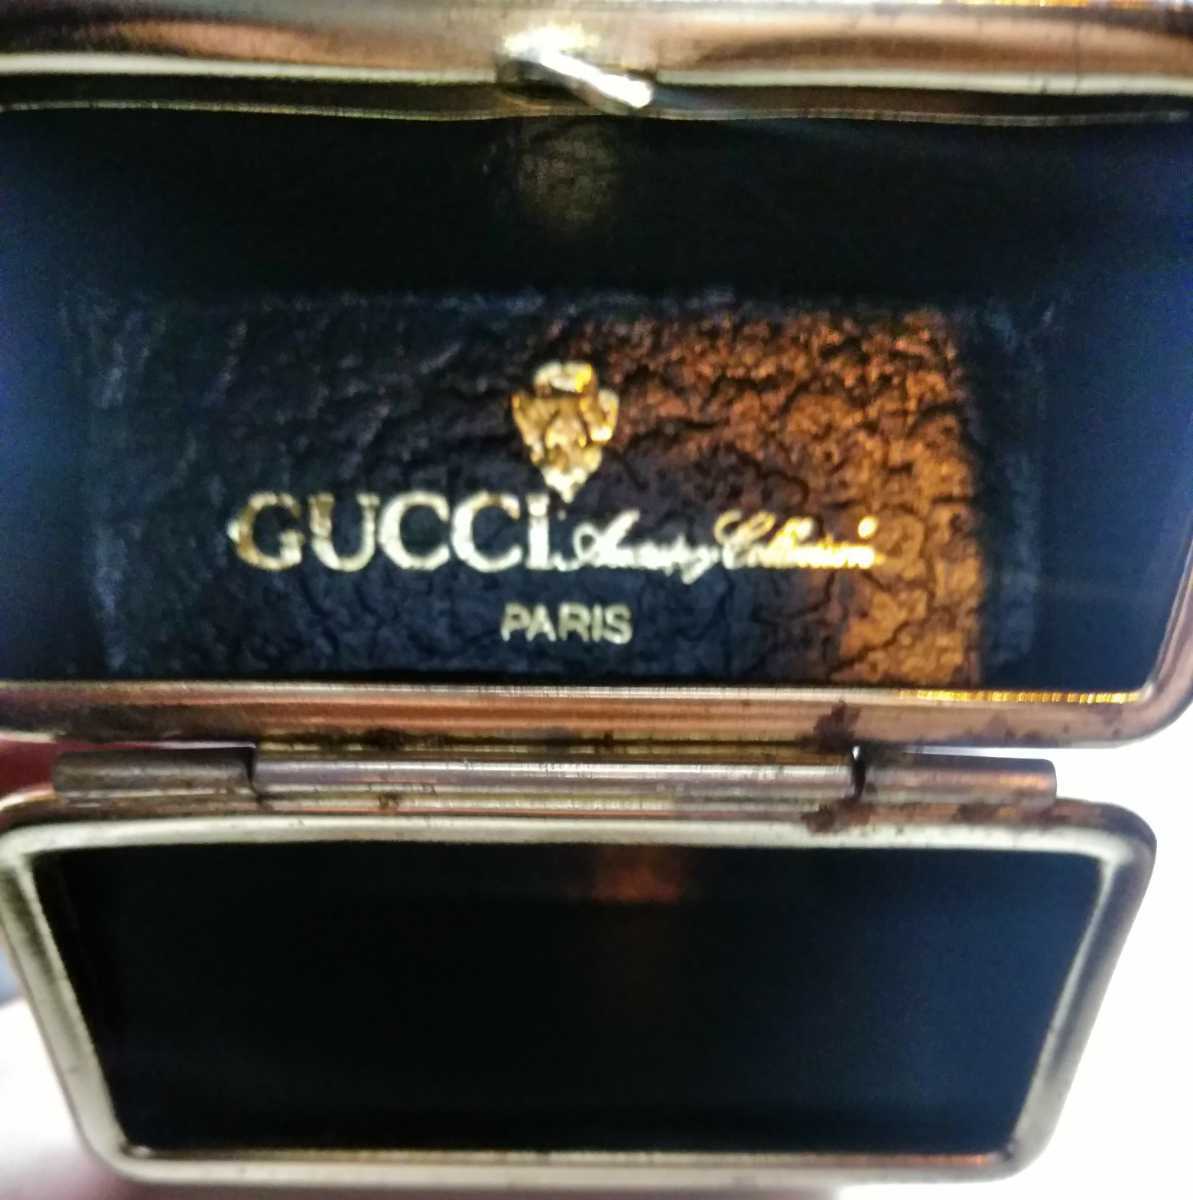 gucci vintage cigarette case ヴィンテージ タバコケース たばこケース シェリー柄 超希少 激レア シェリー オールドグッチ 財布